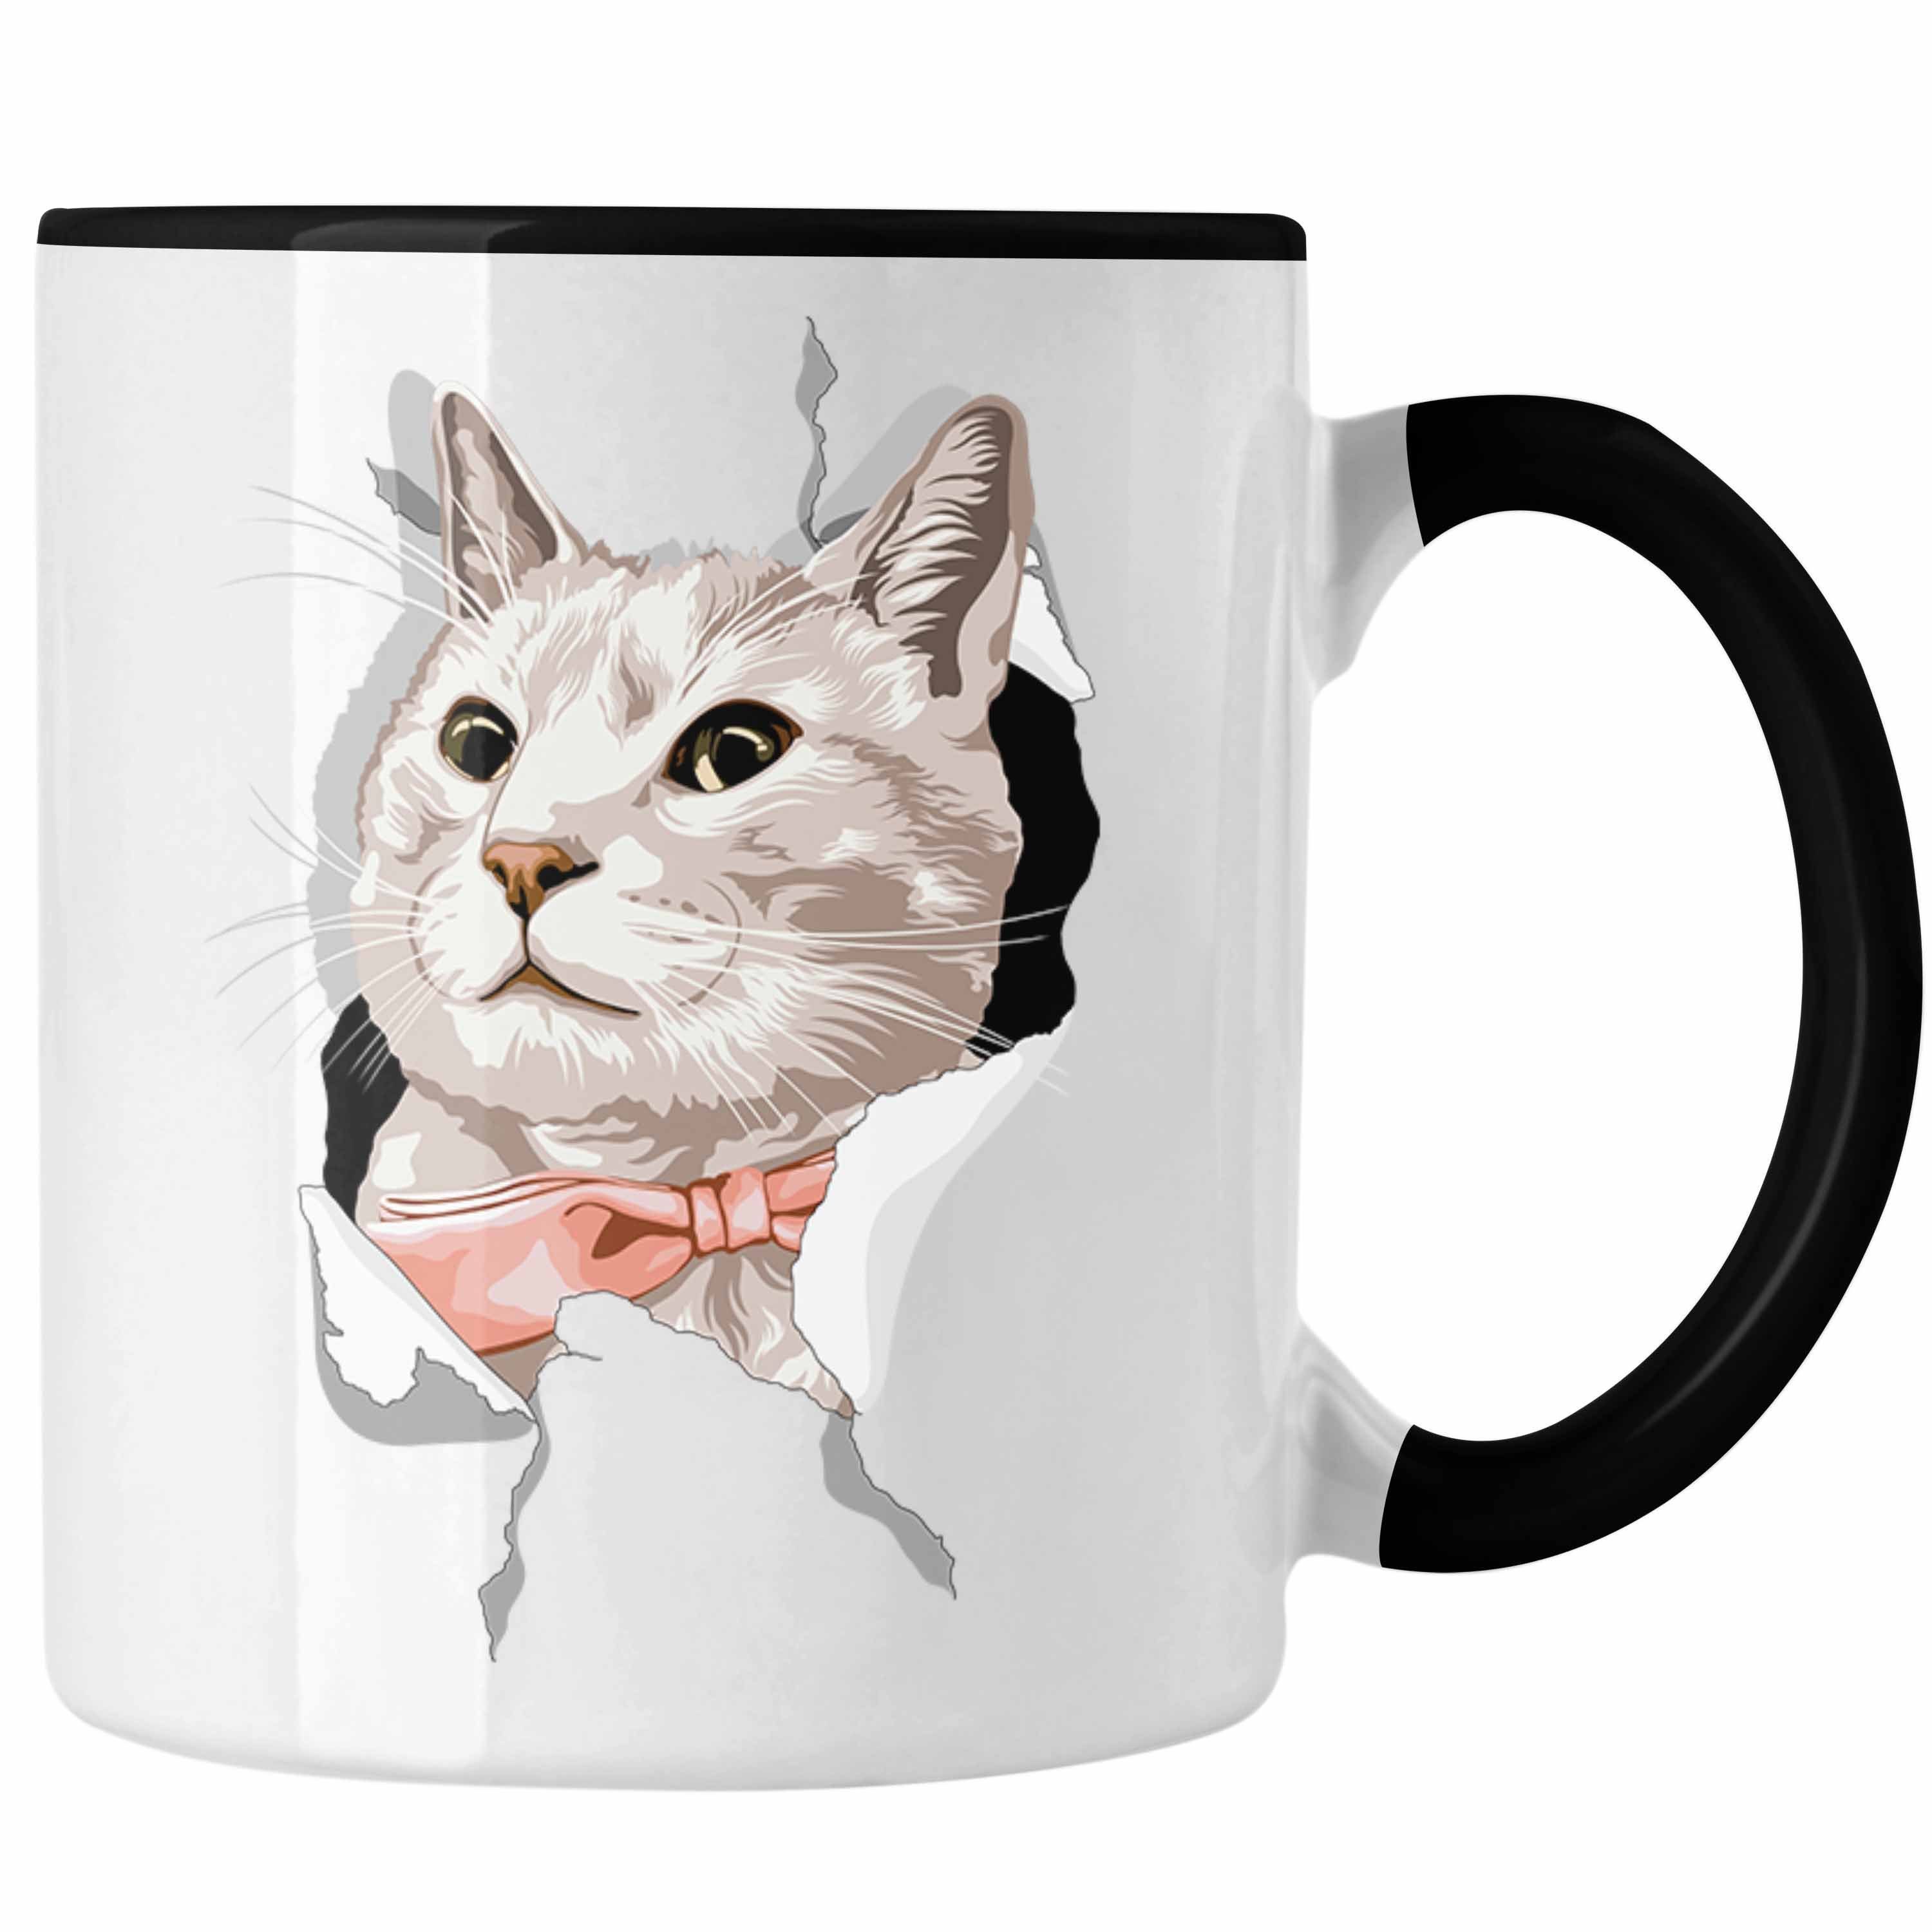 - Geschenkidee Katzen Trendation Katzengrafik Lustige Tasse Tasse Geschenk 3D Katzenbesitzerin Trendation Schwarz